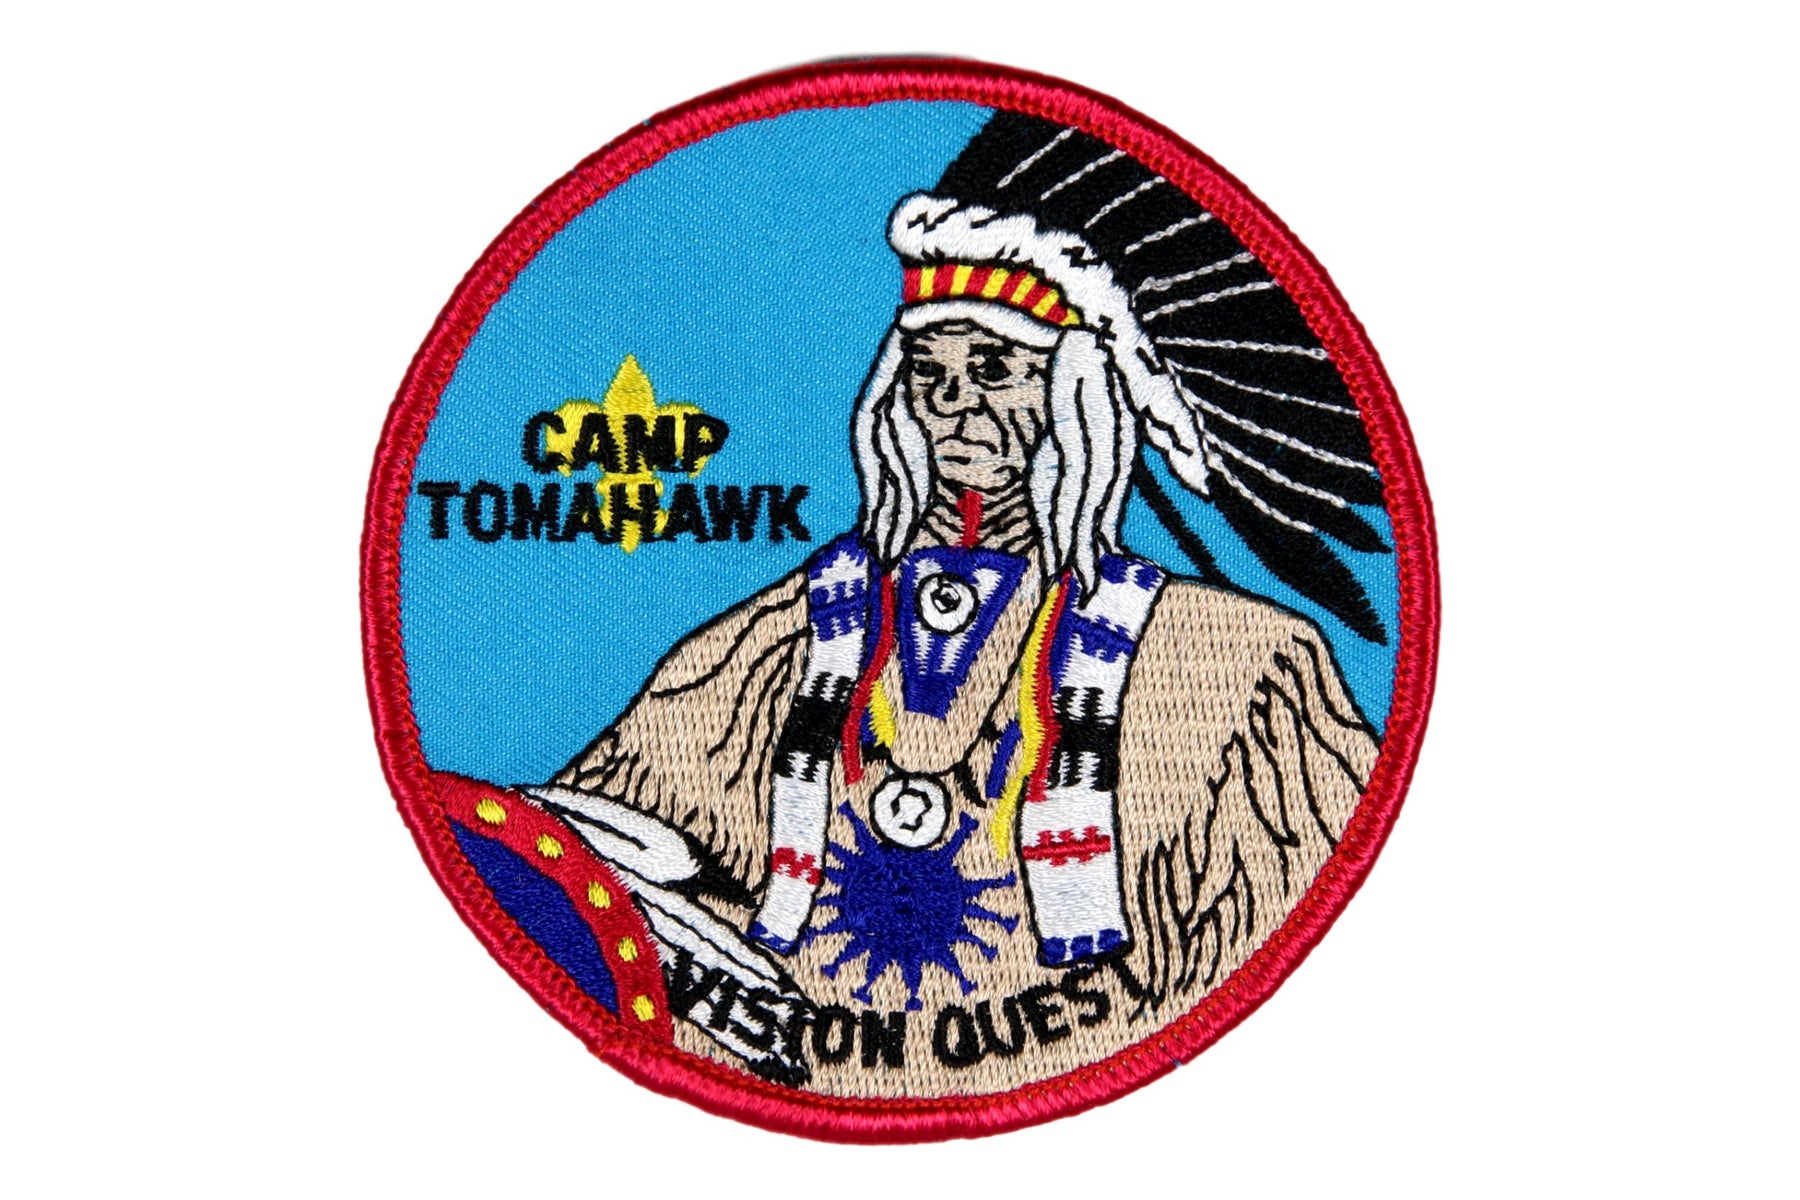 Tomahawk Camp Patch 1997